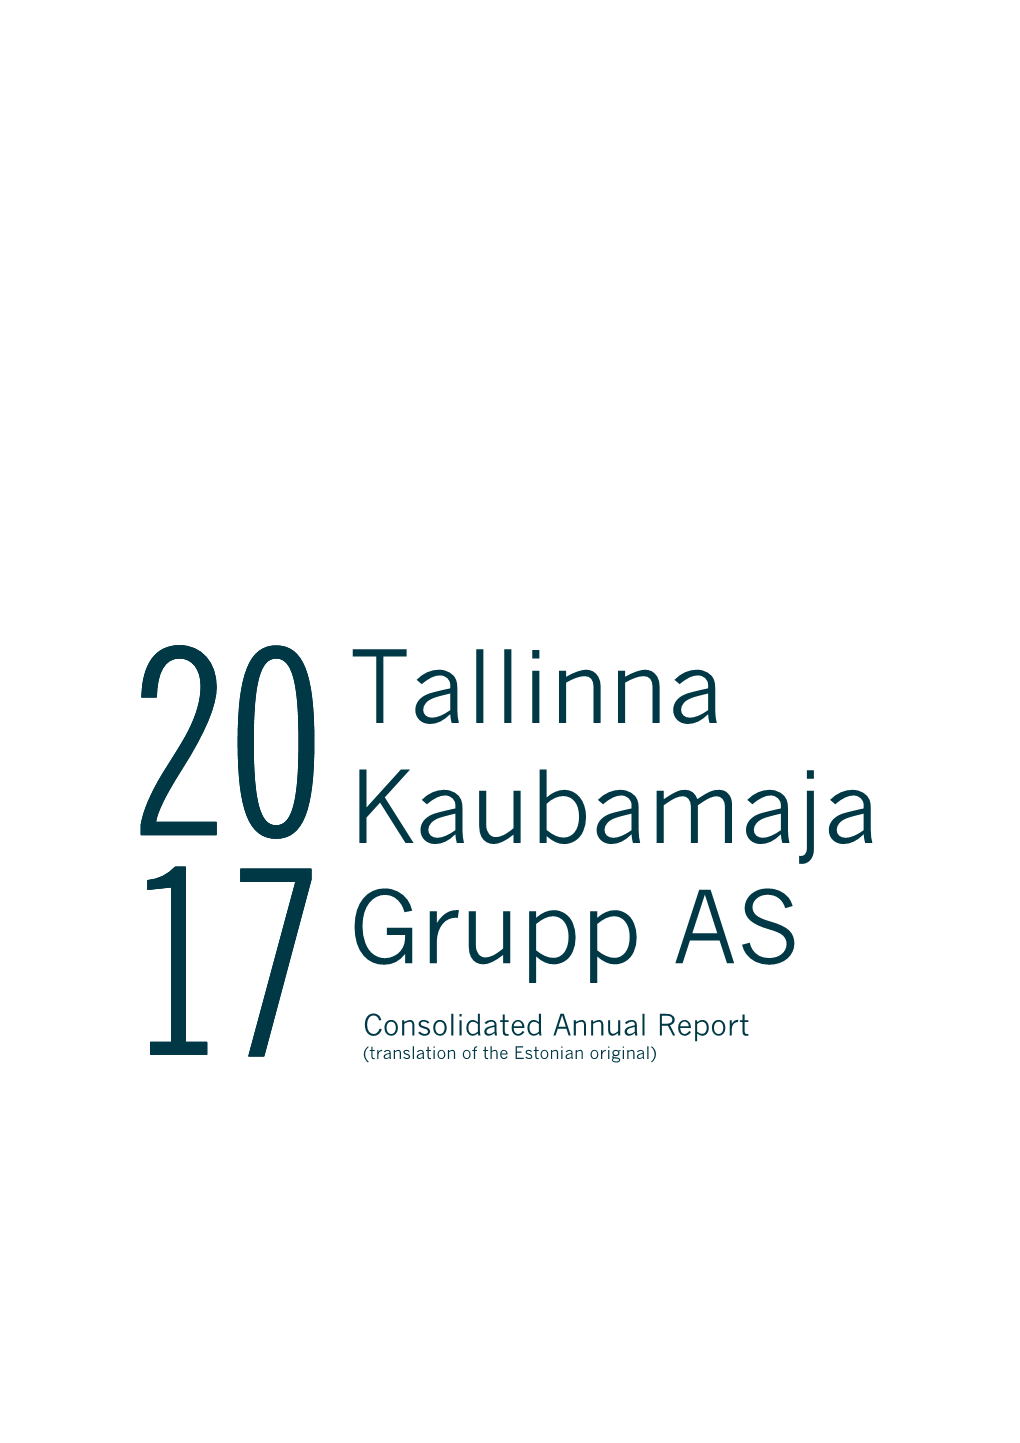 Tallinna Kaubamaja Grupp As Consolidated Annual Report 2017